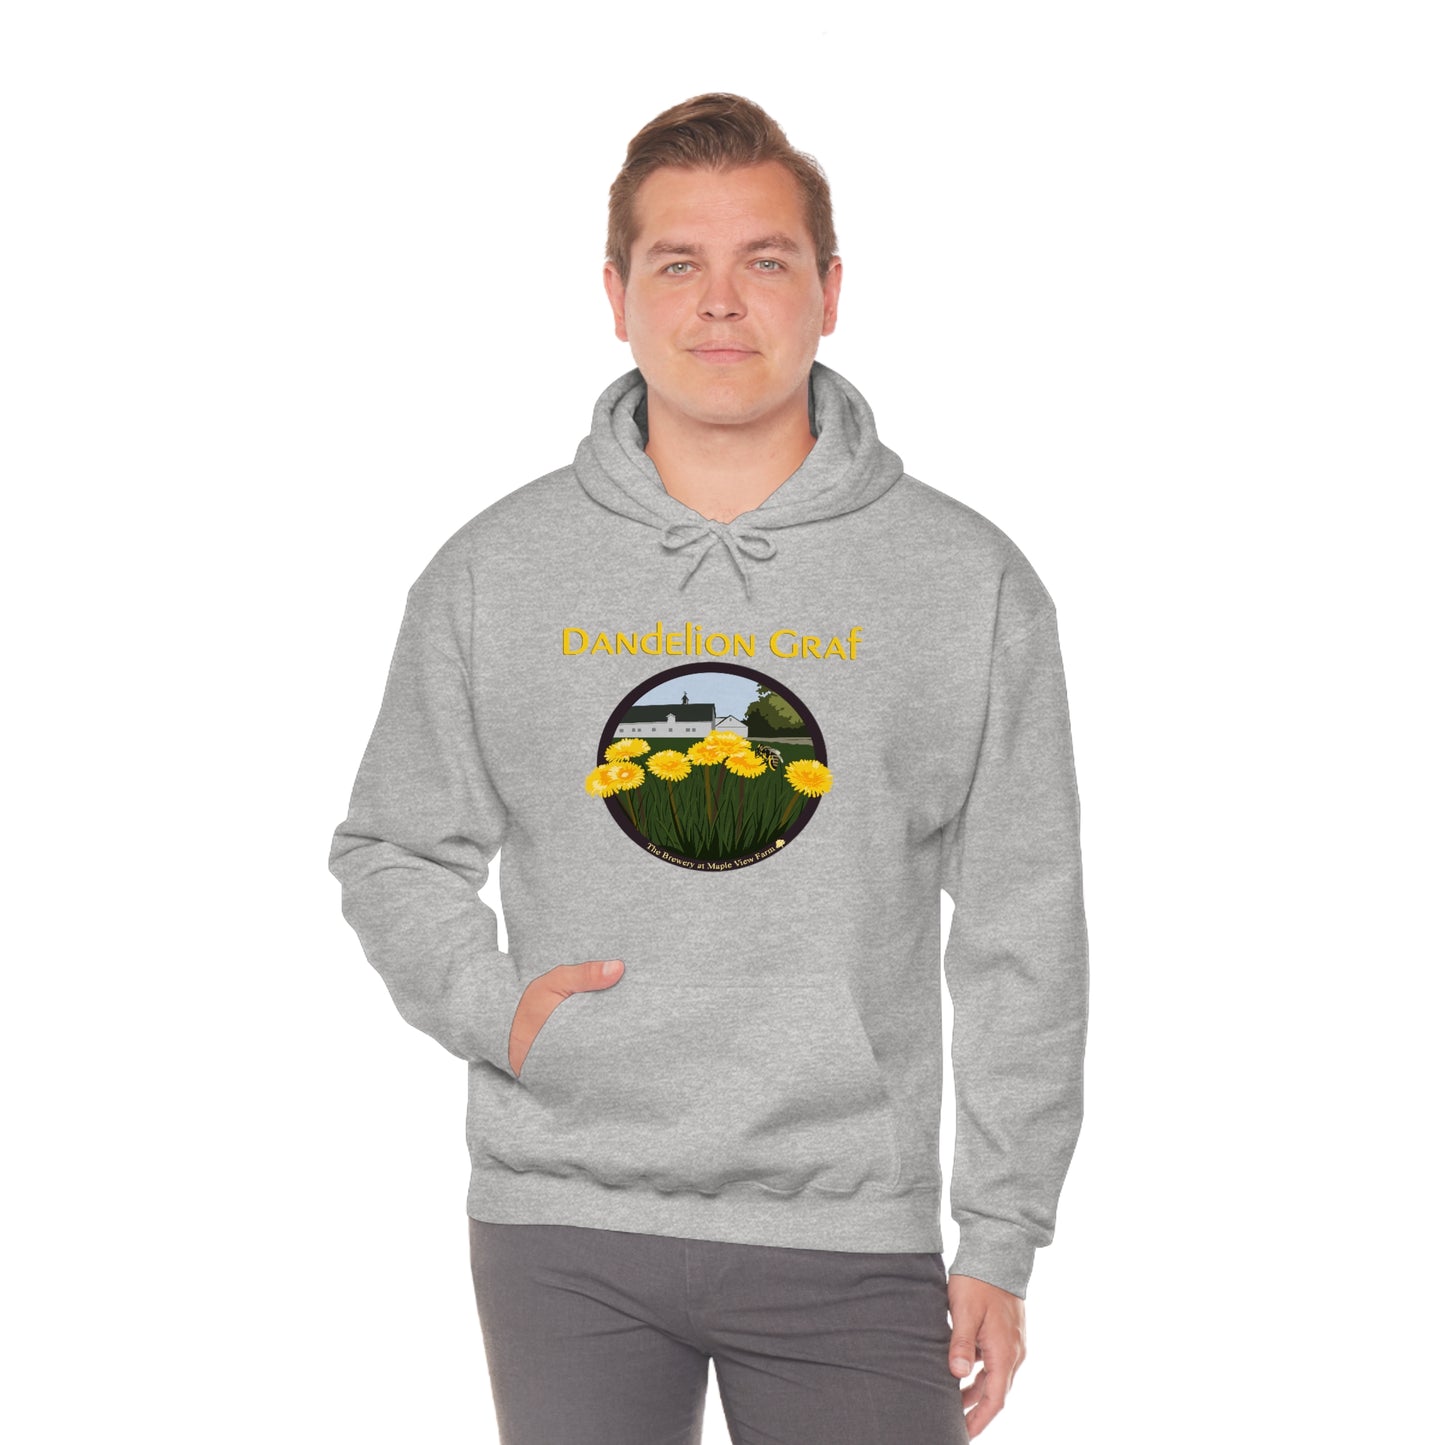 Dandelion Graf Hooded Sweatshirt